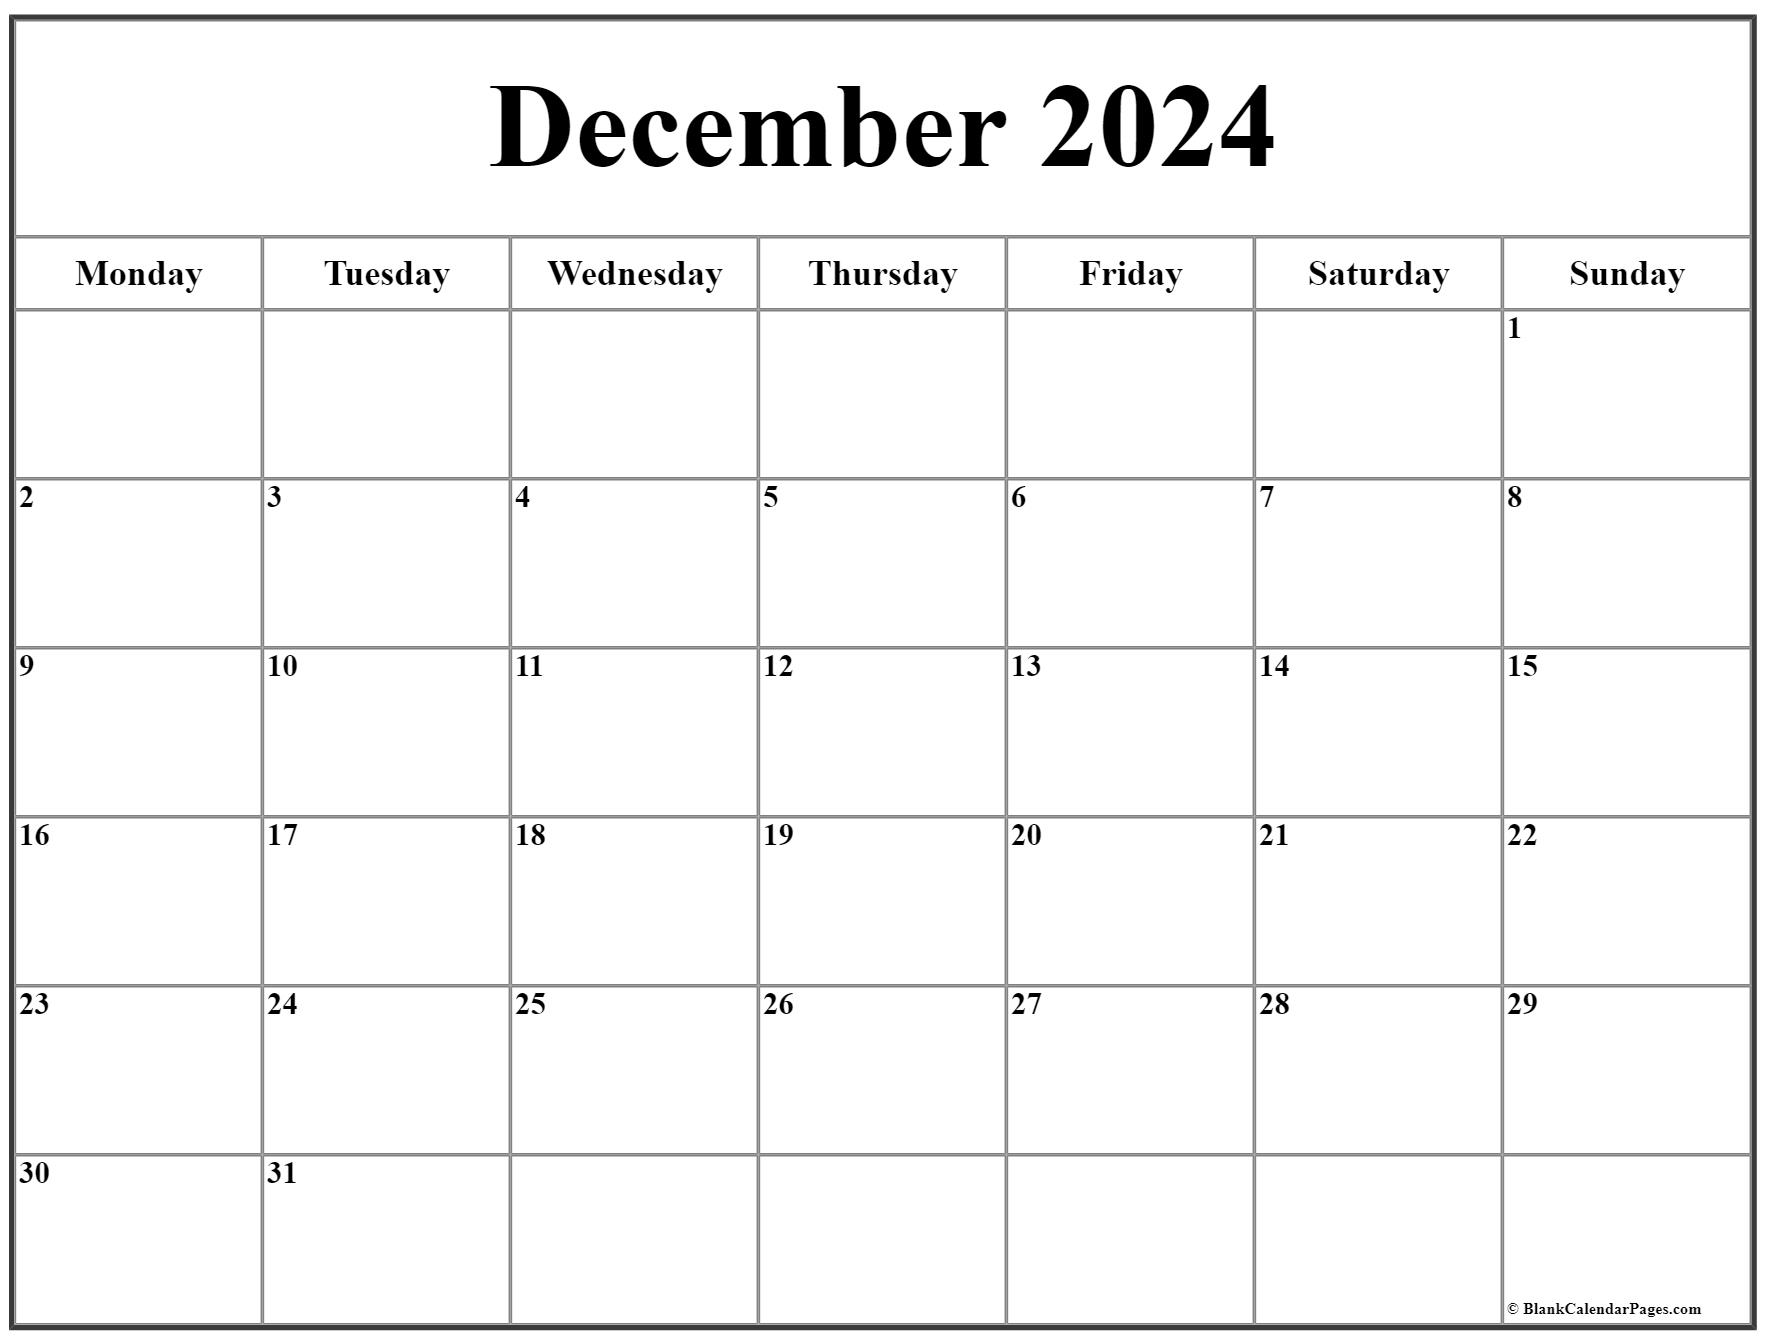 December 2020 Monday Calendar